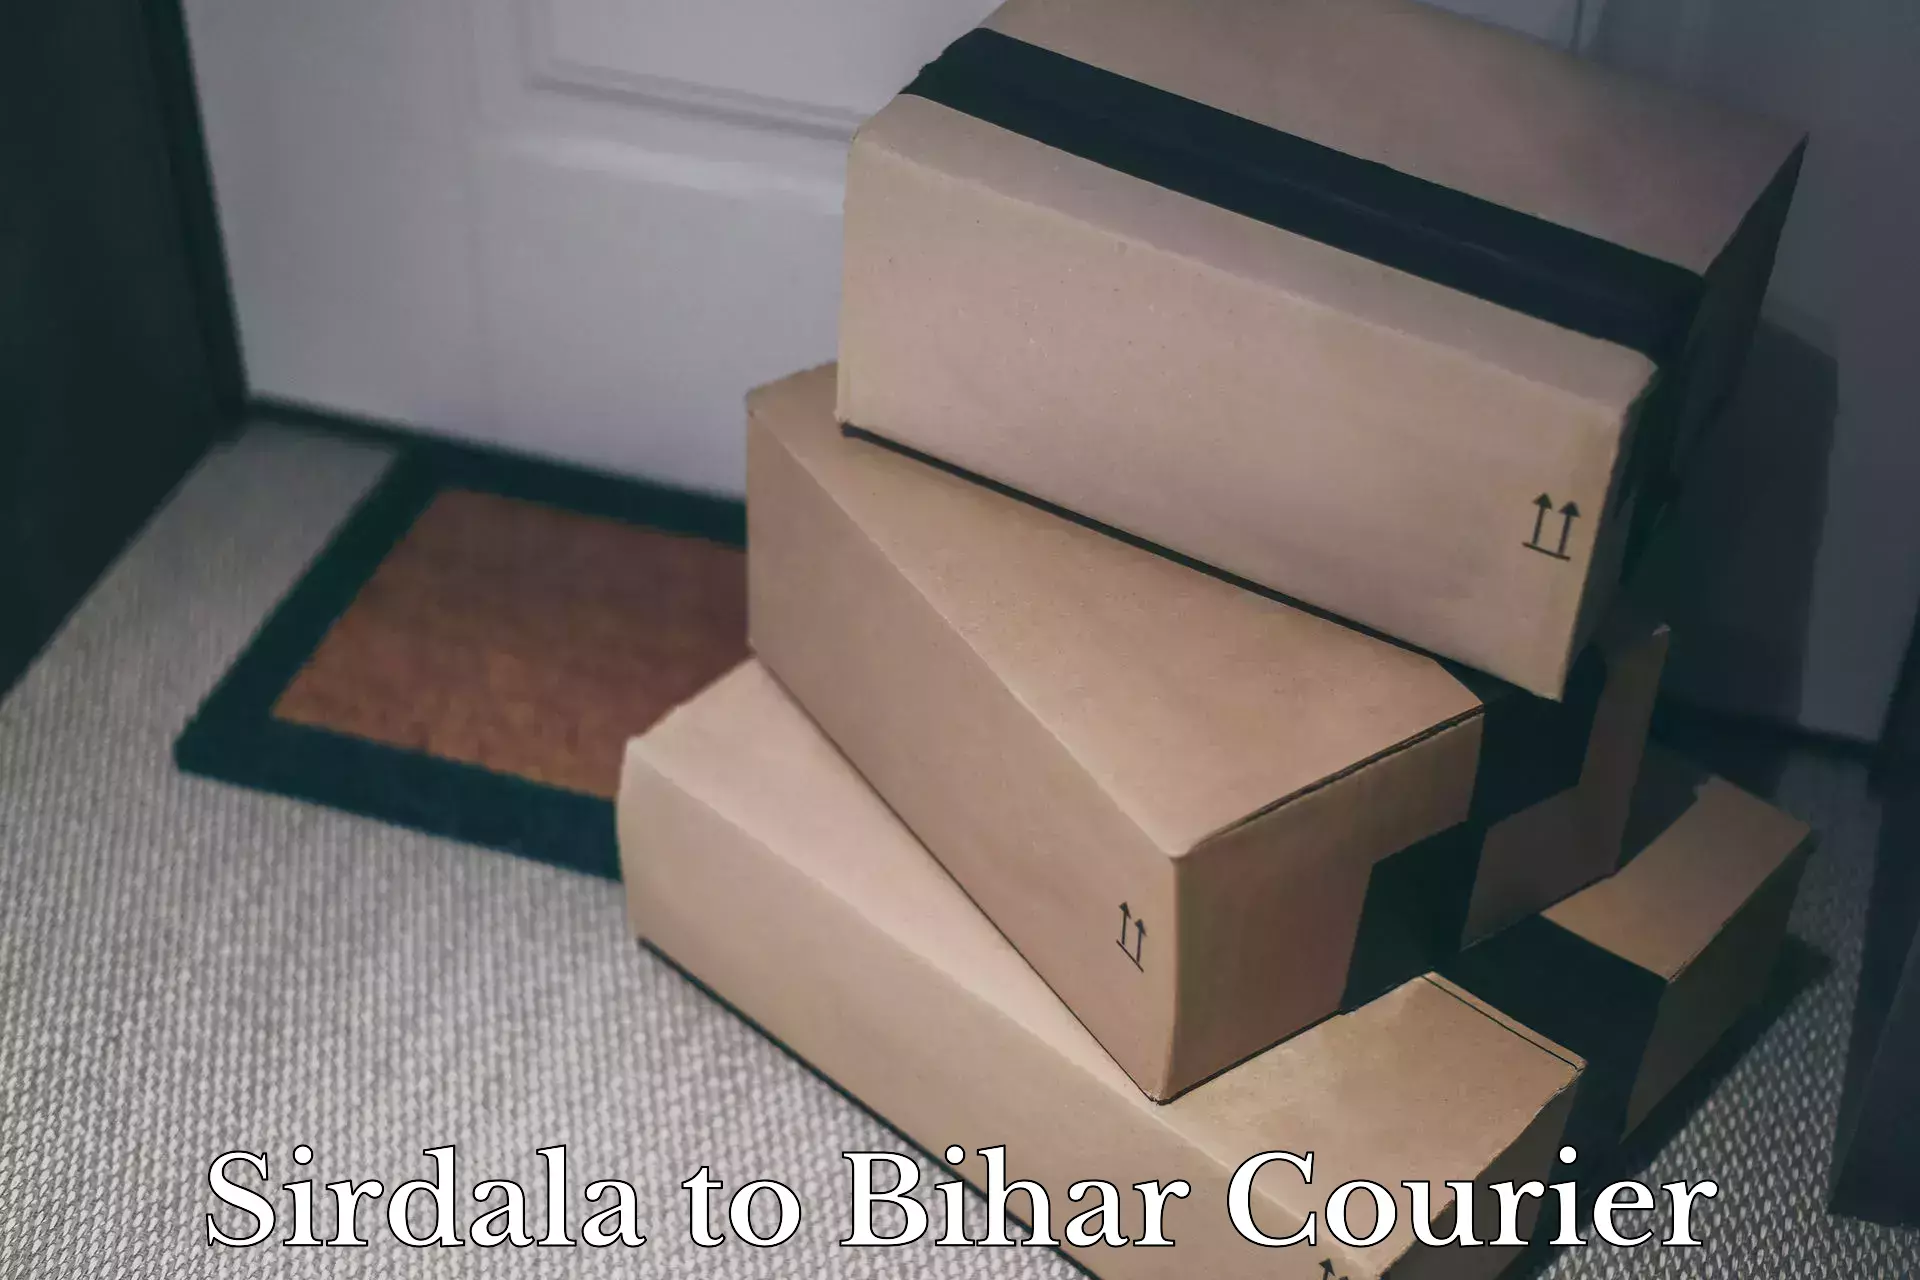 Professional moving company Sirdala to Bihar